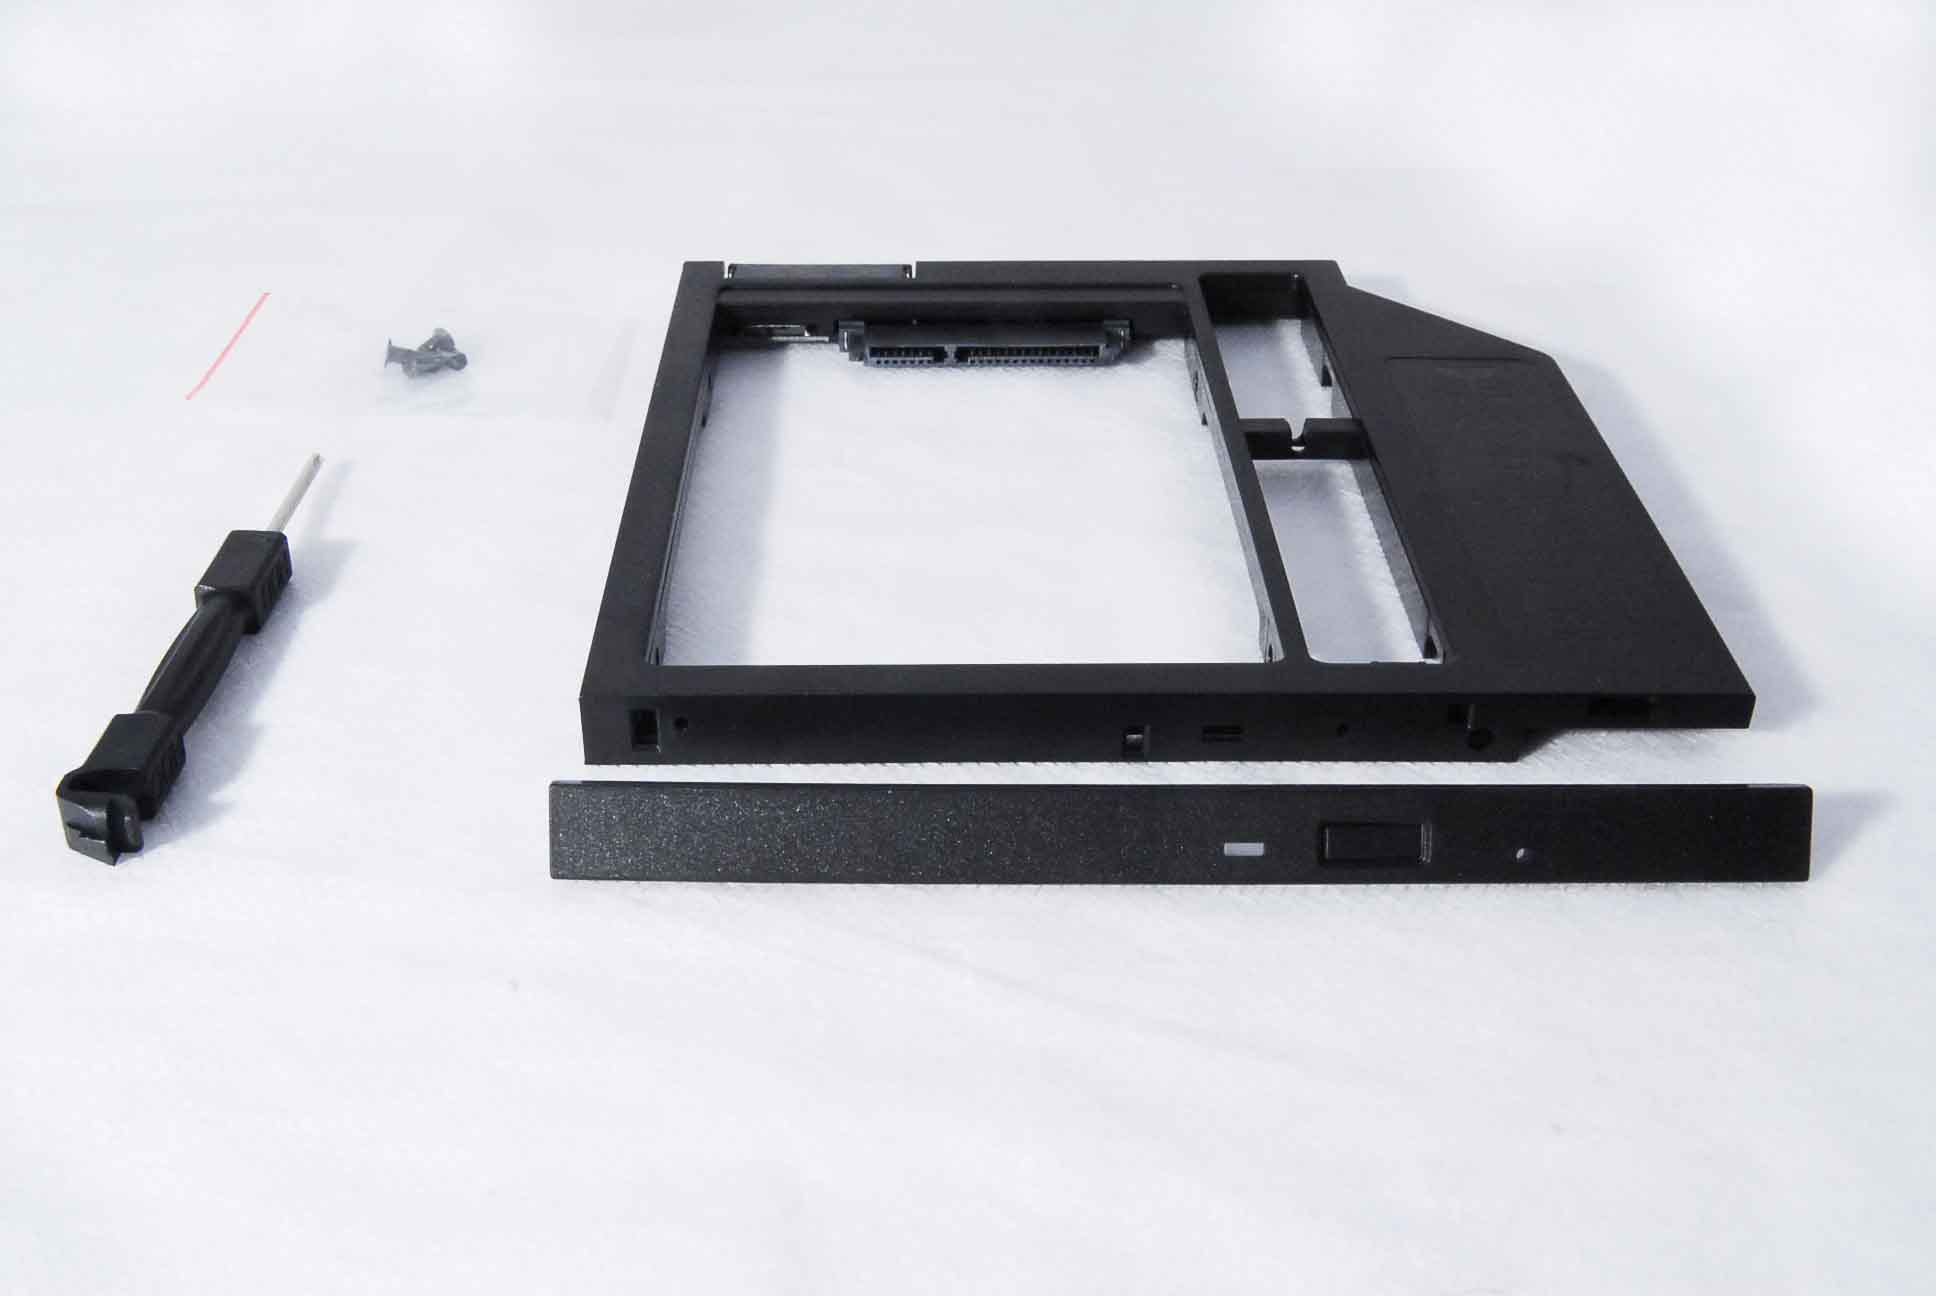 Адаптер оптибей Espada SS90 (optibay, hdd caddy) SATA/miniSATA (SlimSATA) 9мм для подключения HDD/SSD 2,5” к ноутбуку вместо DVD, другое фото